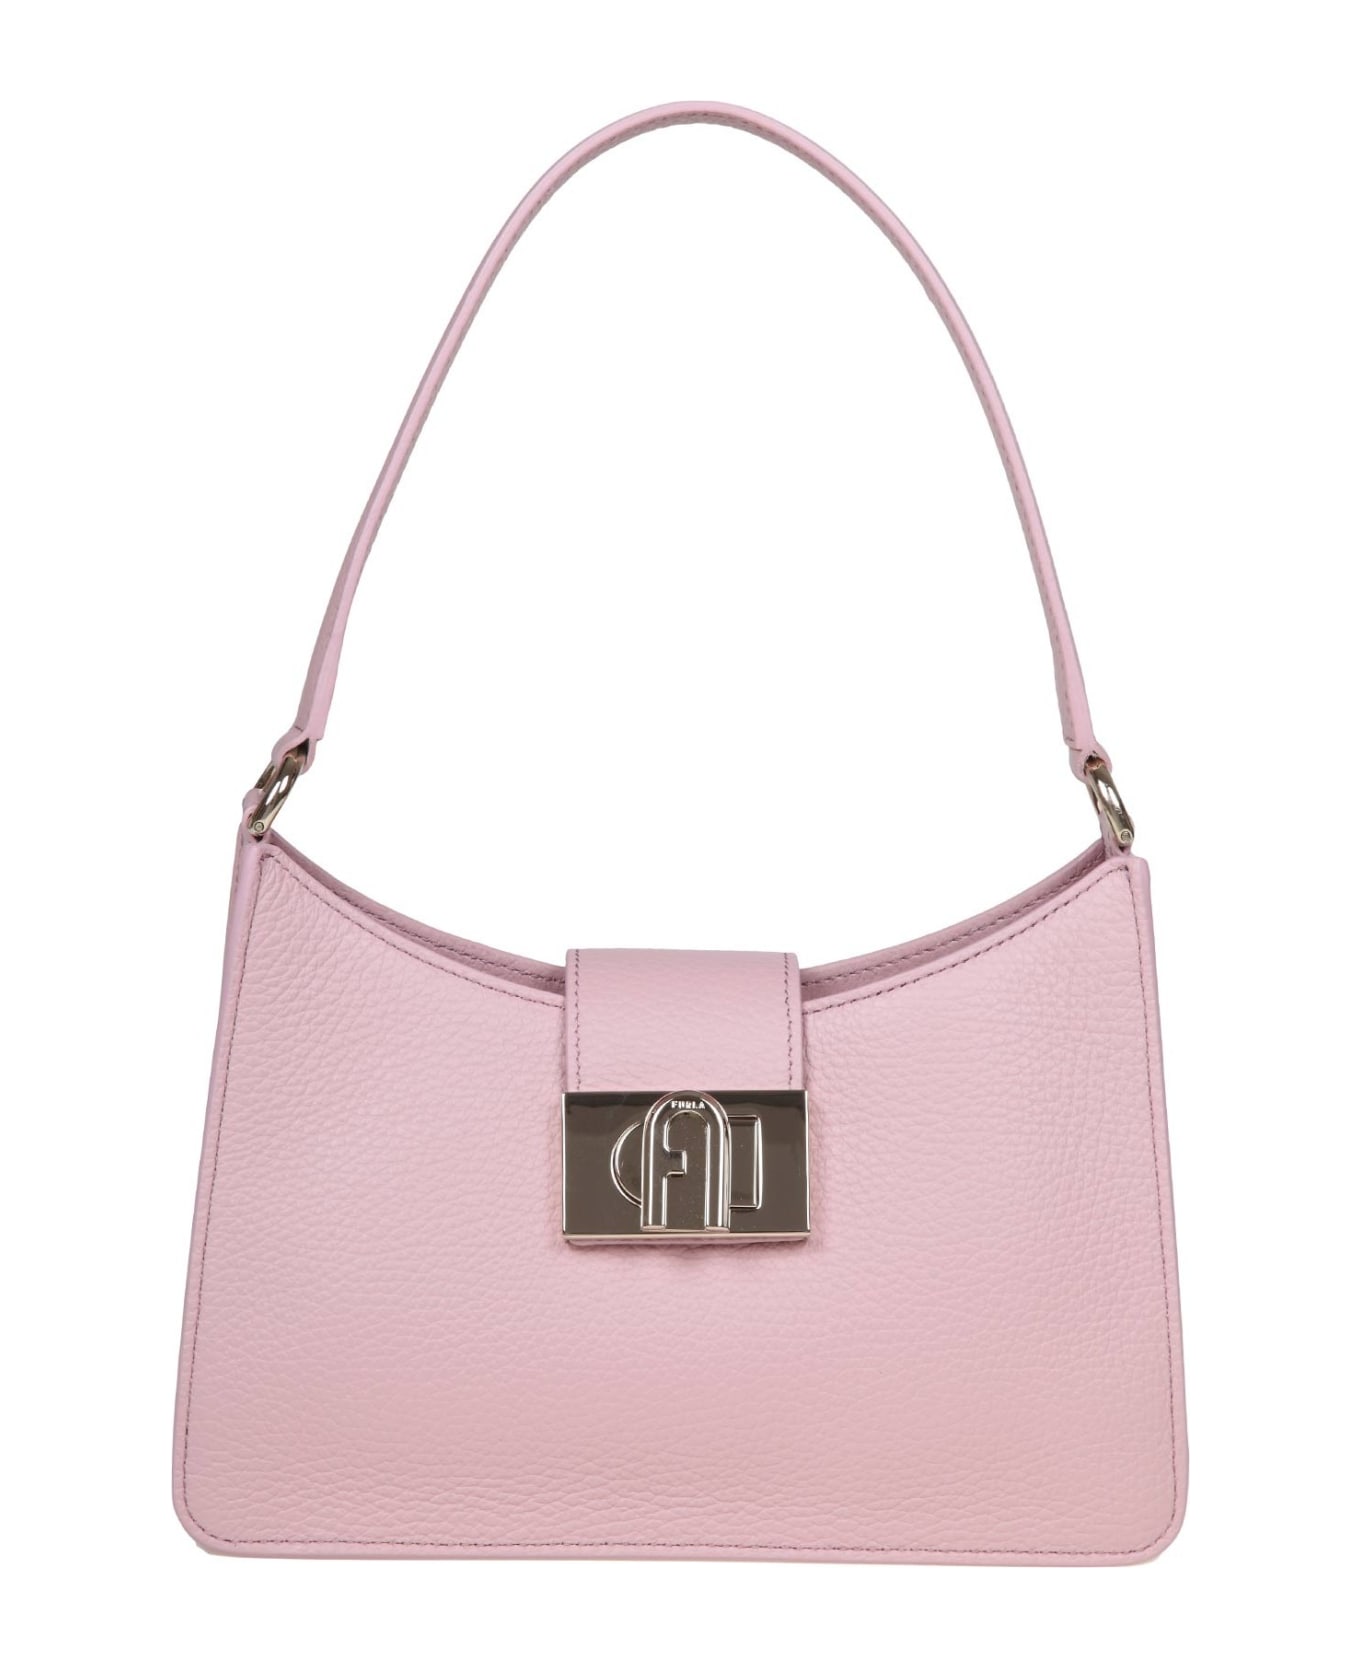 Furla 1927 S Shoulder Bag In Pink Soft Leather - Alba ショルダーバッグ